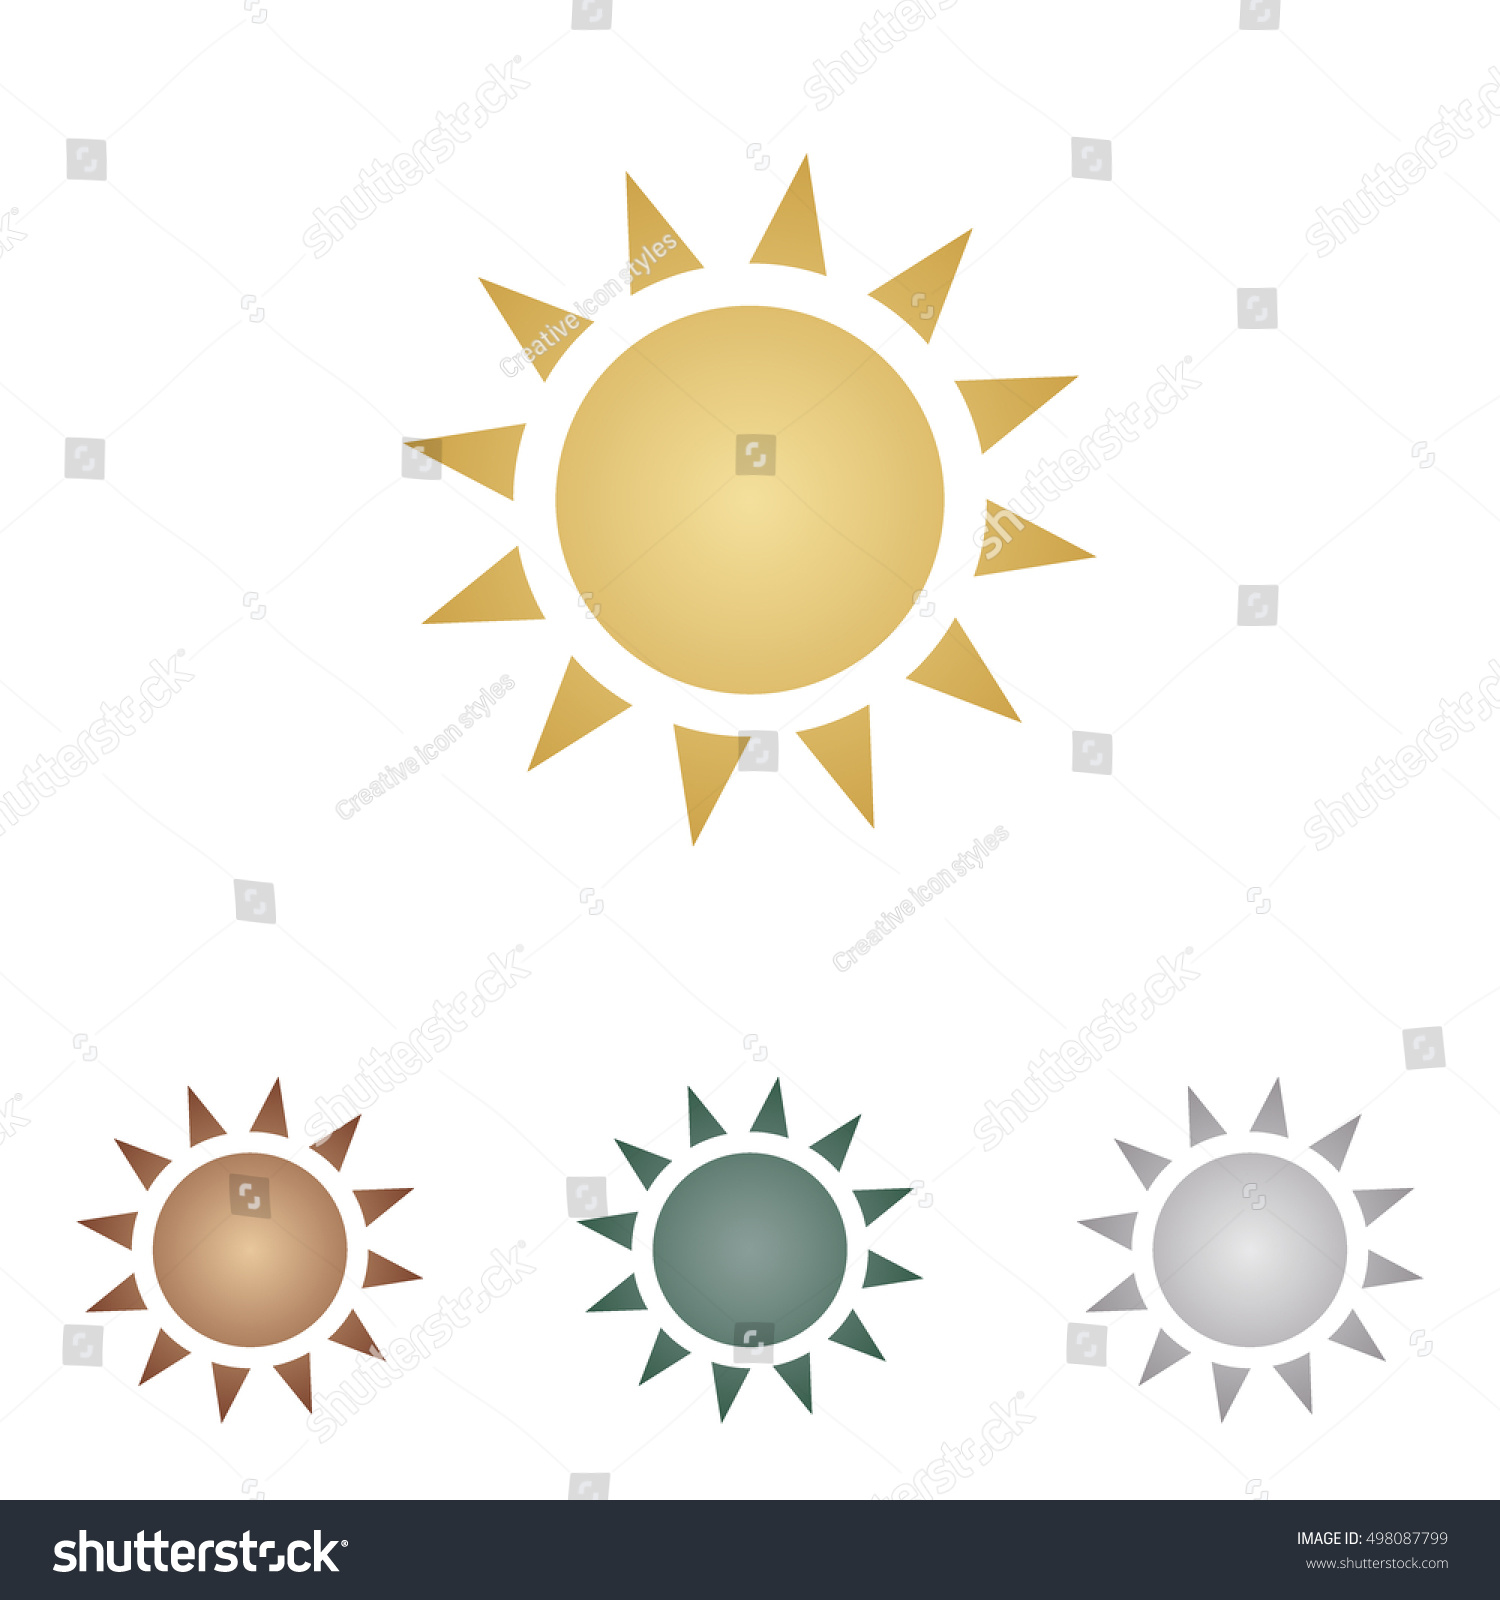 Edit Vectors Free Online - Sun sign | Shutterstock Editor